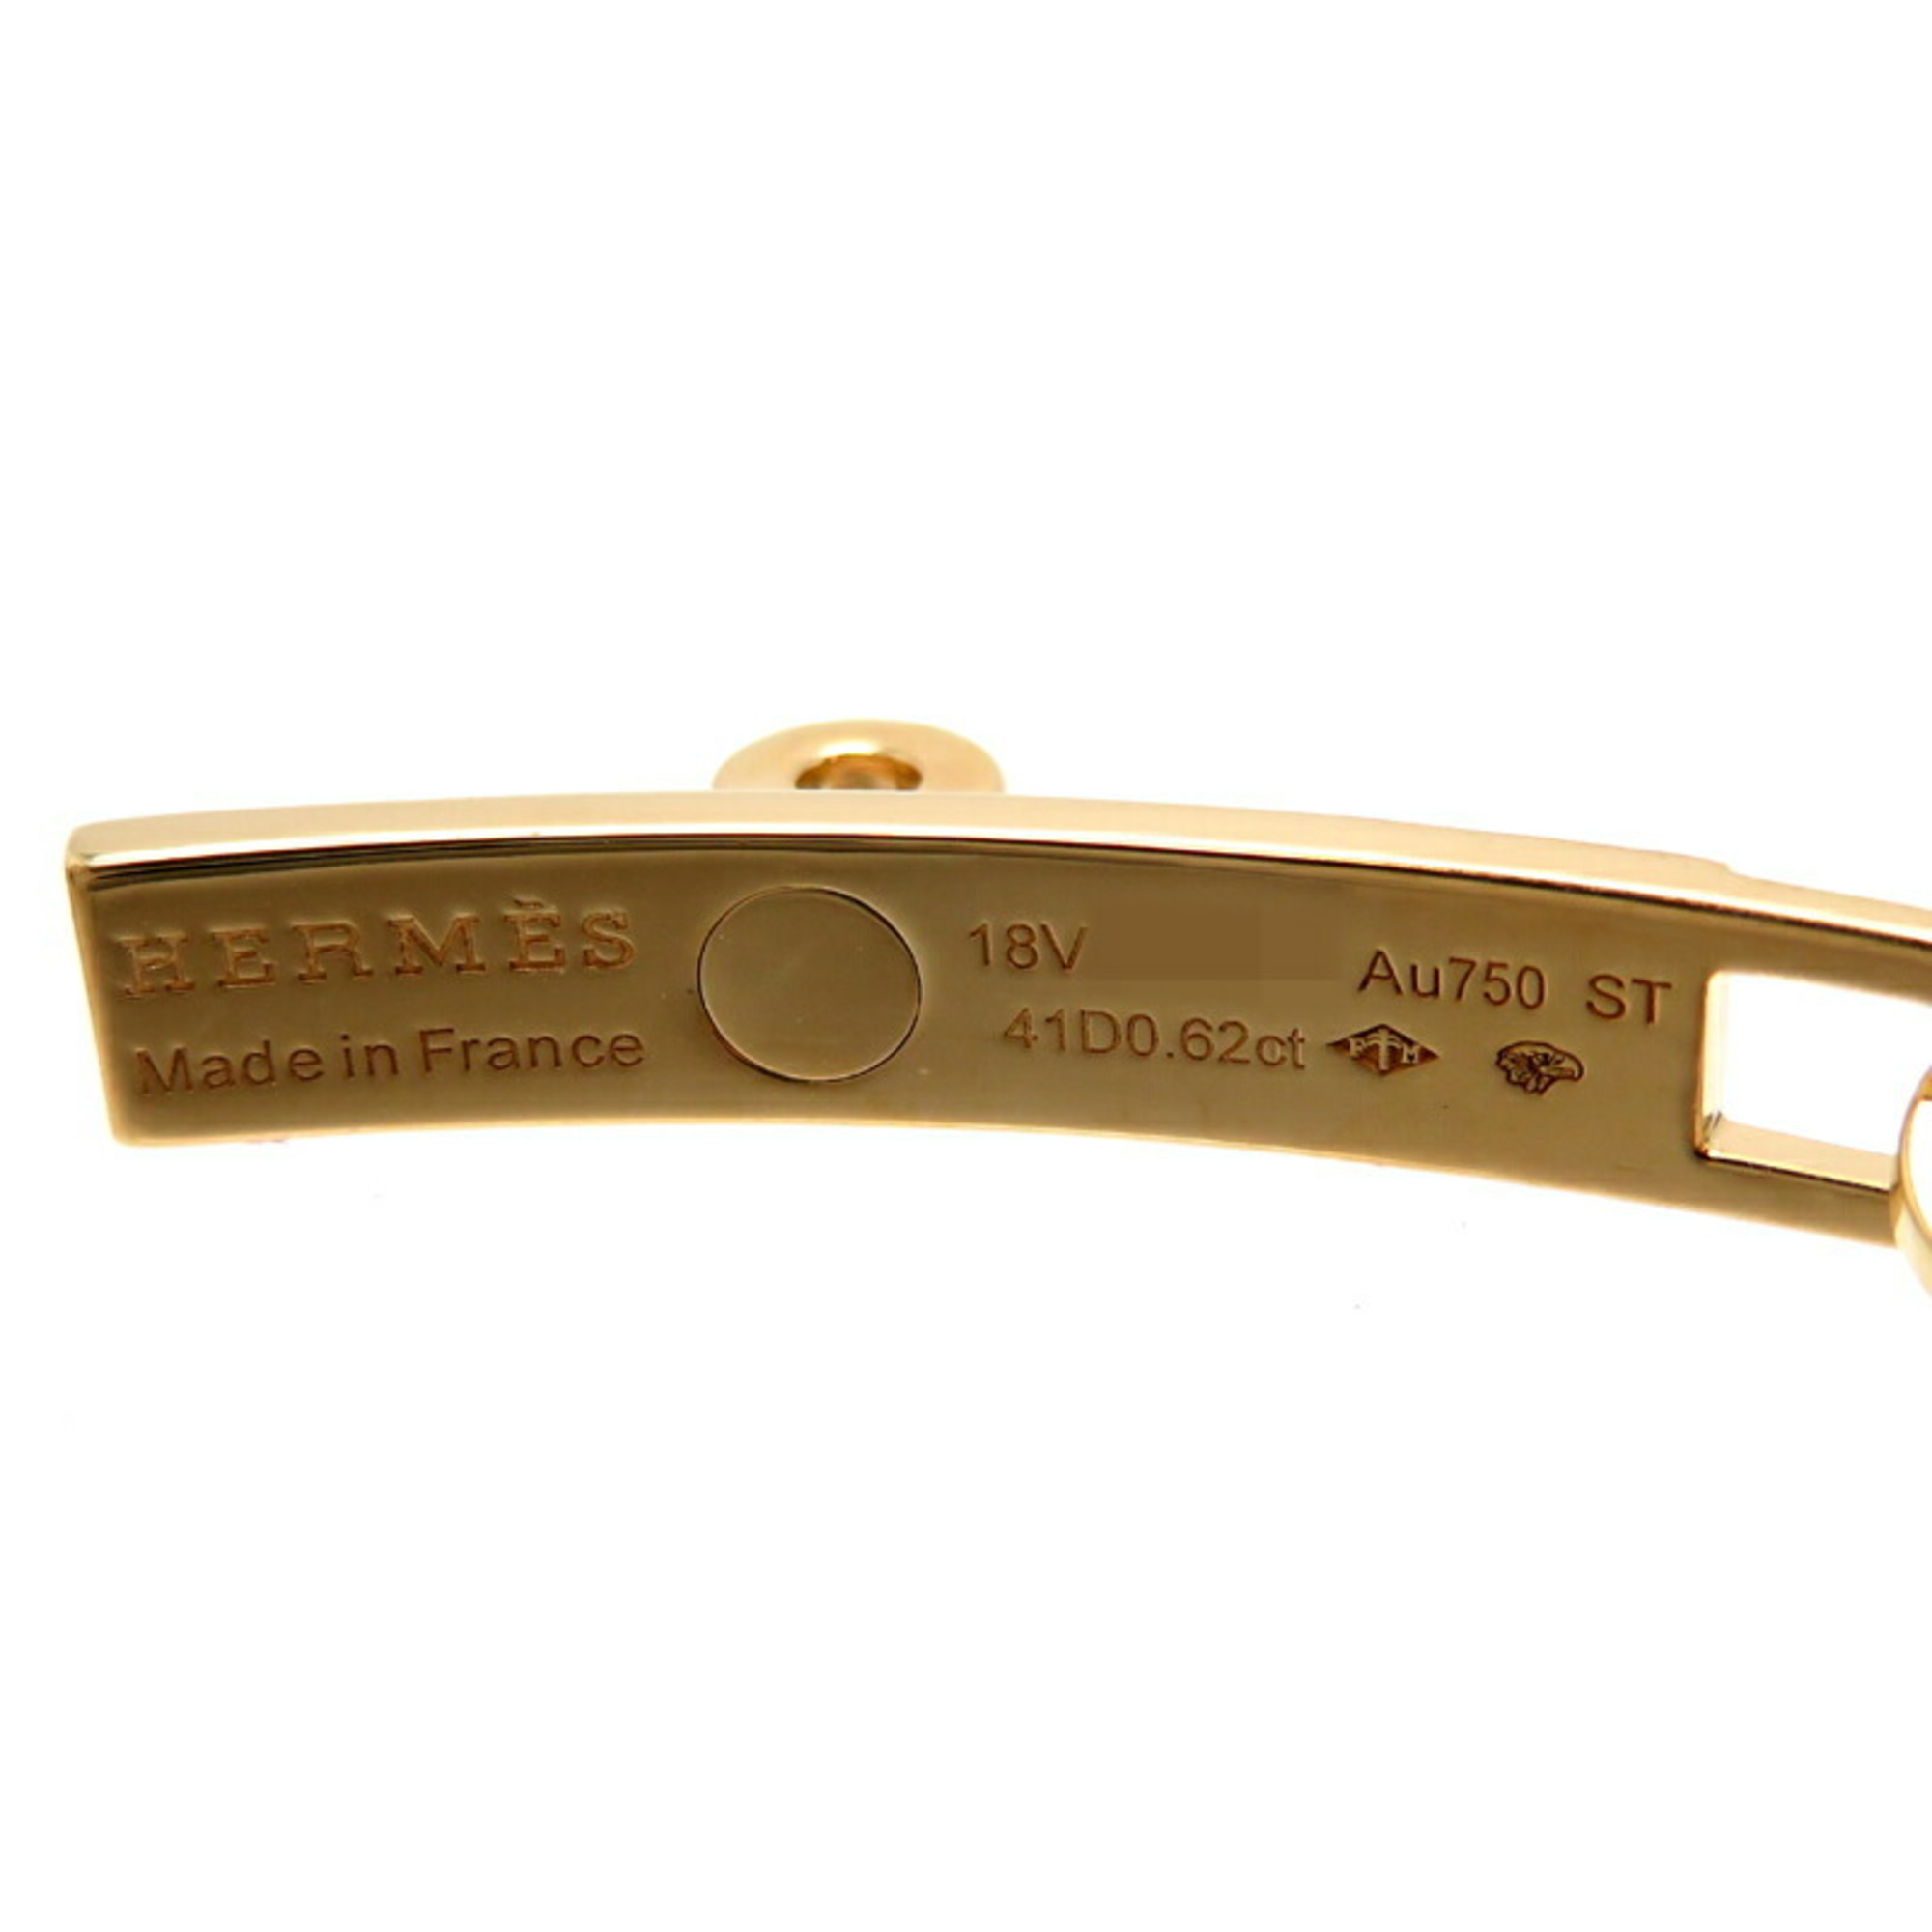 Hermes 750YG Diamond Kelly Chain Women's Bracelet 750 Yellow Gold